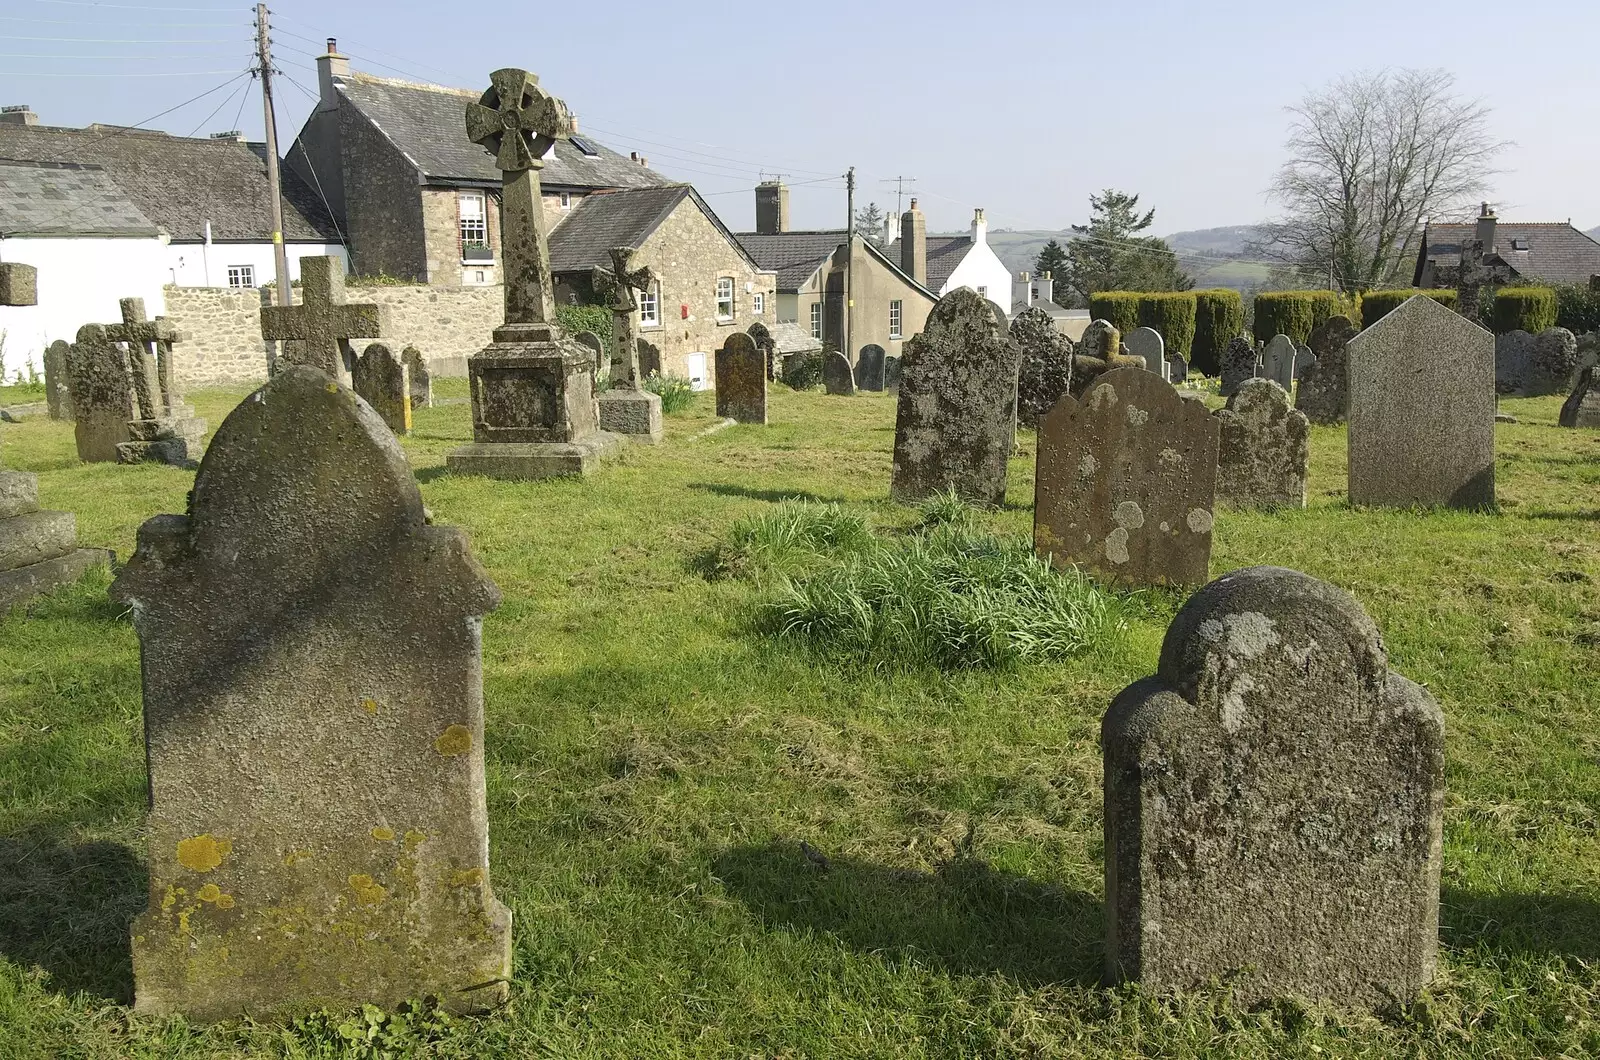 Chagford graveyard, from A Walk up Sheepstor and Visiting Sis and Matt, Dartmoor and Chagford, Devon - 9th April 2007